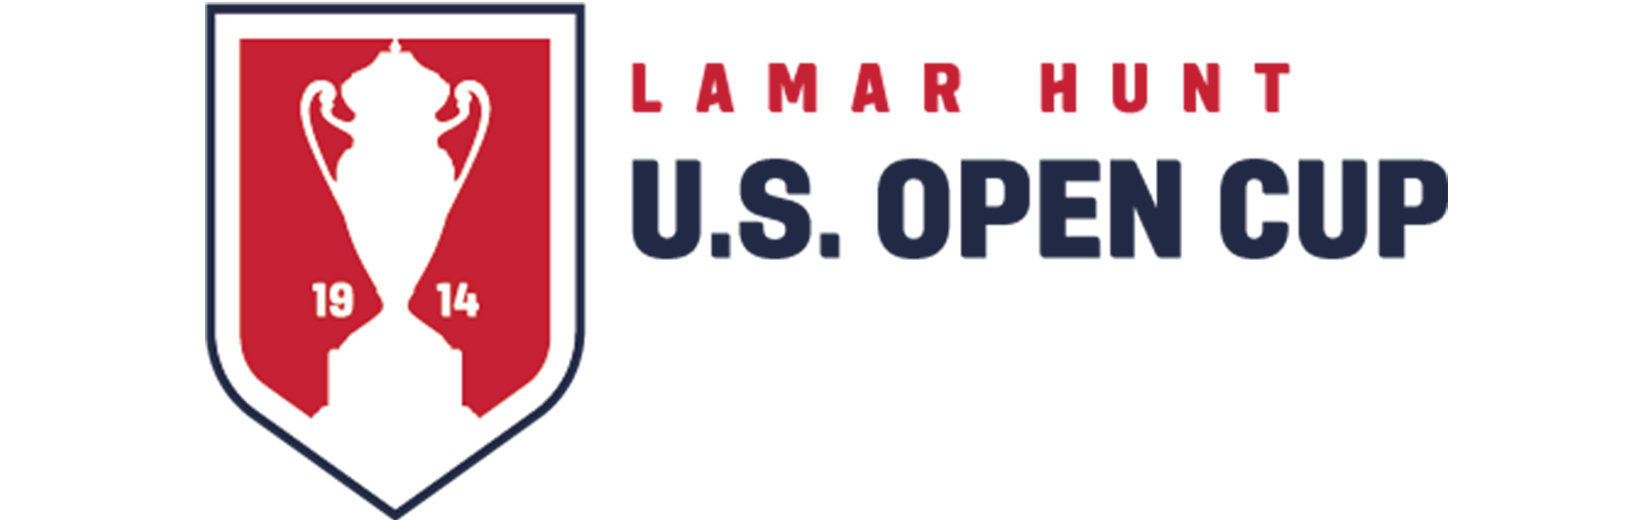 Lamar Hunt U.S. Open Cup U.S. Soccer Official Website